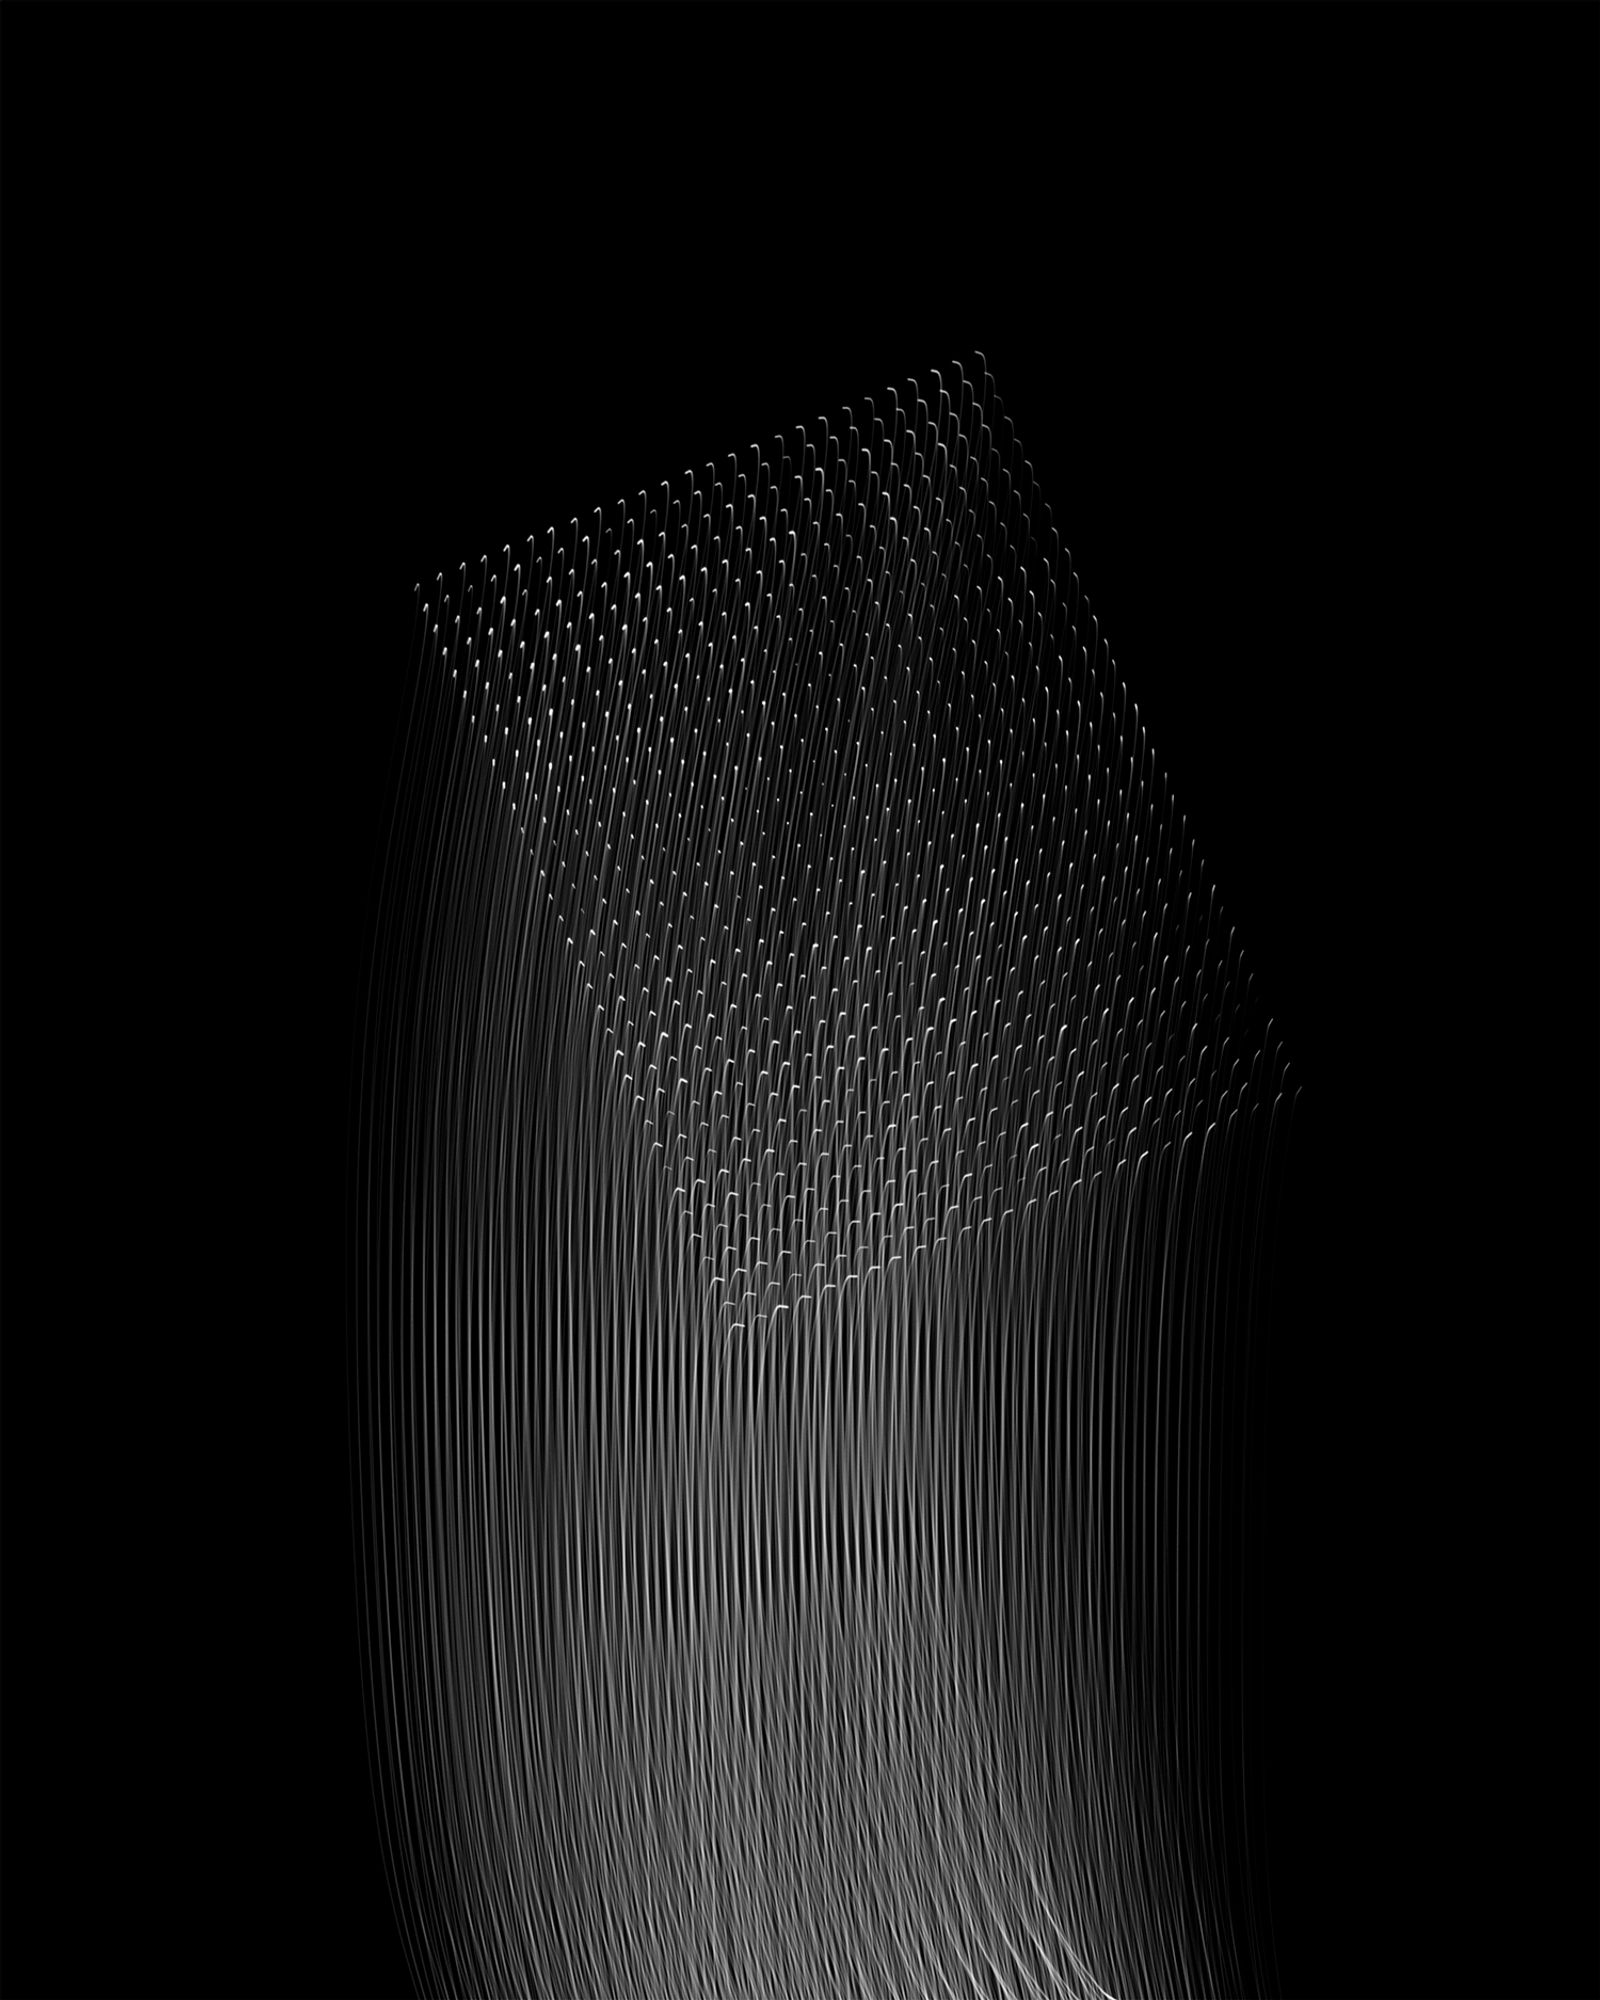 © Fernando Marante - Variation 89. Form in Format (after Paul Klee), photograph (2020)